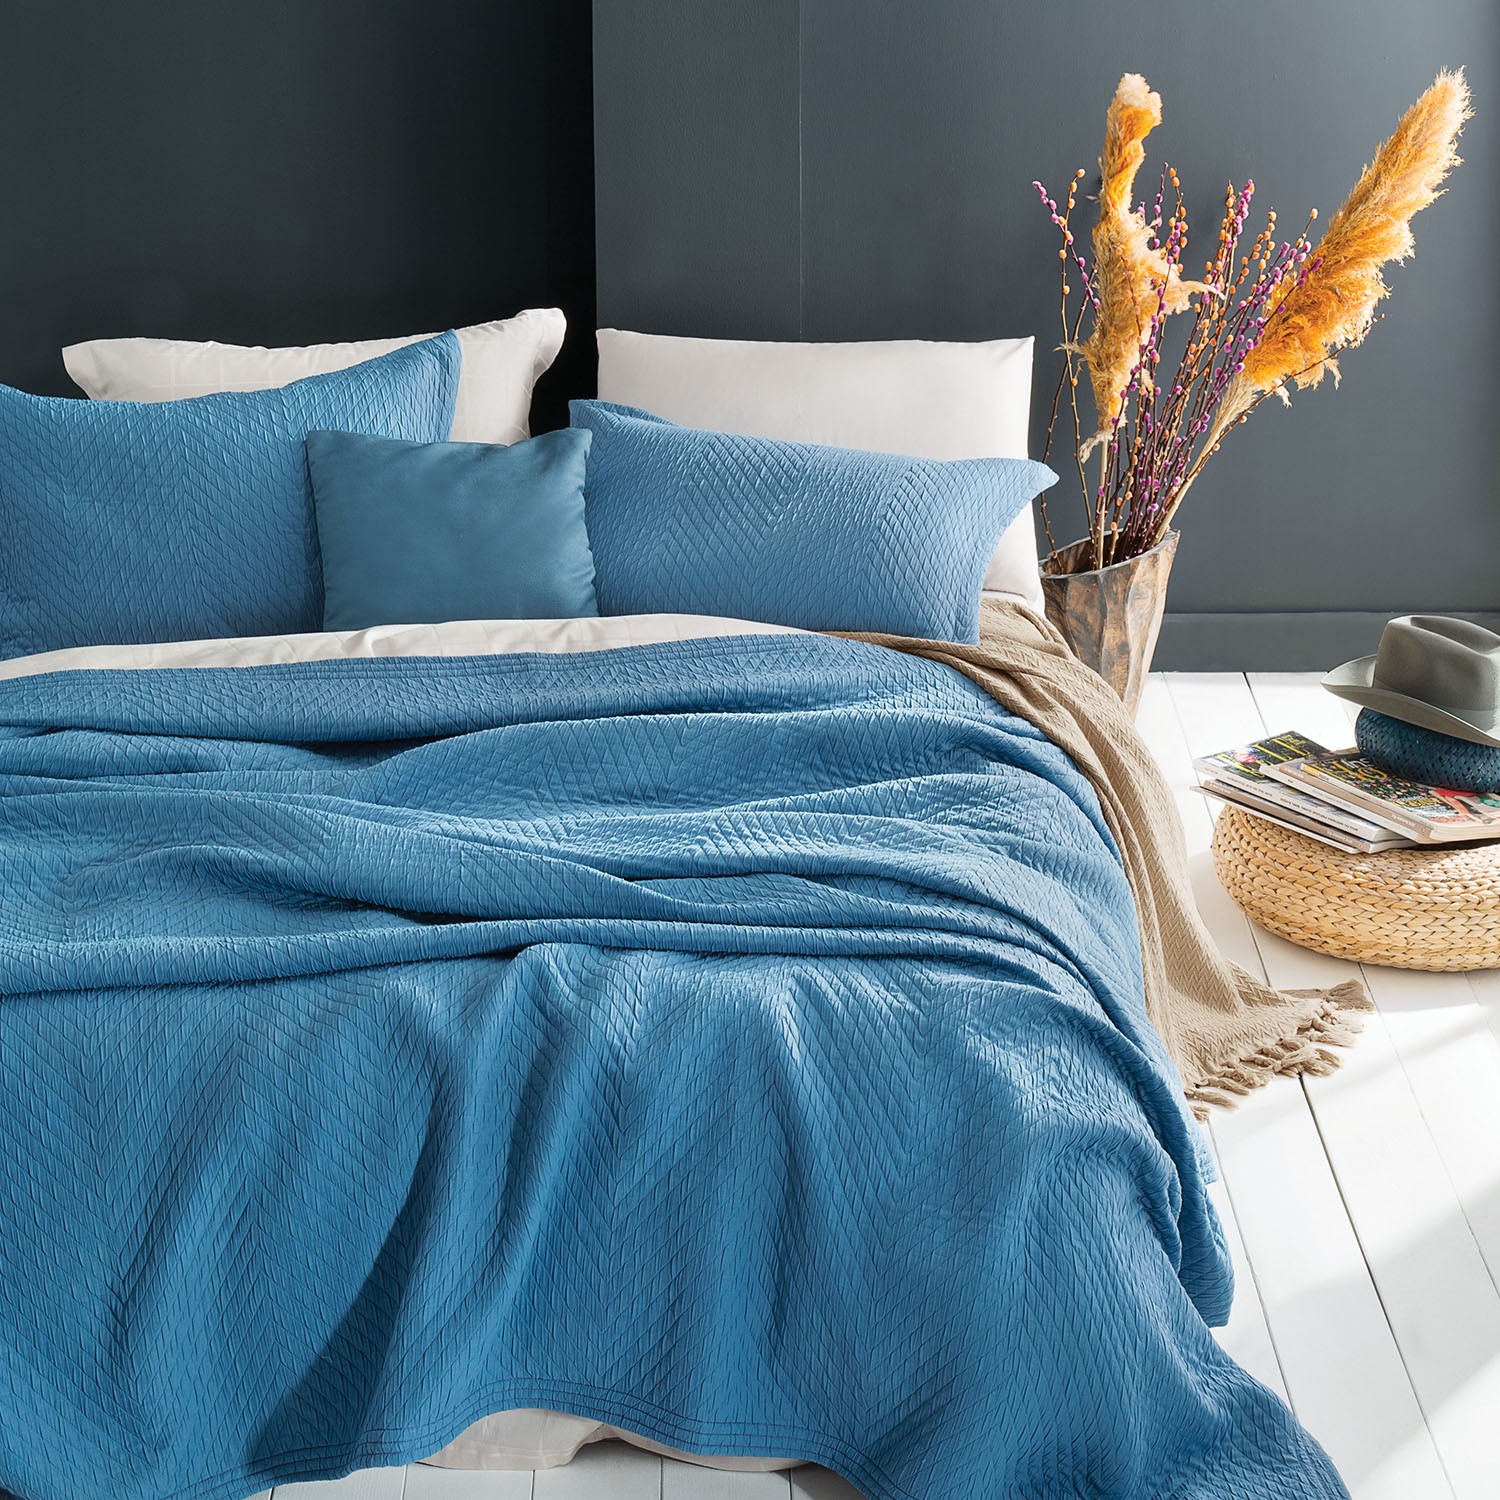 Yataş Bedding Lukas Yatak Örtüsü Seti Çift Kişilik Xl Mavi Fiyatı